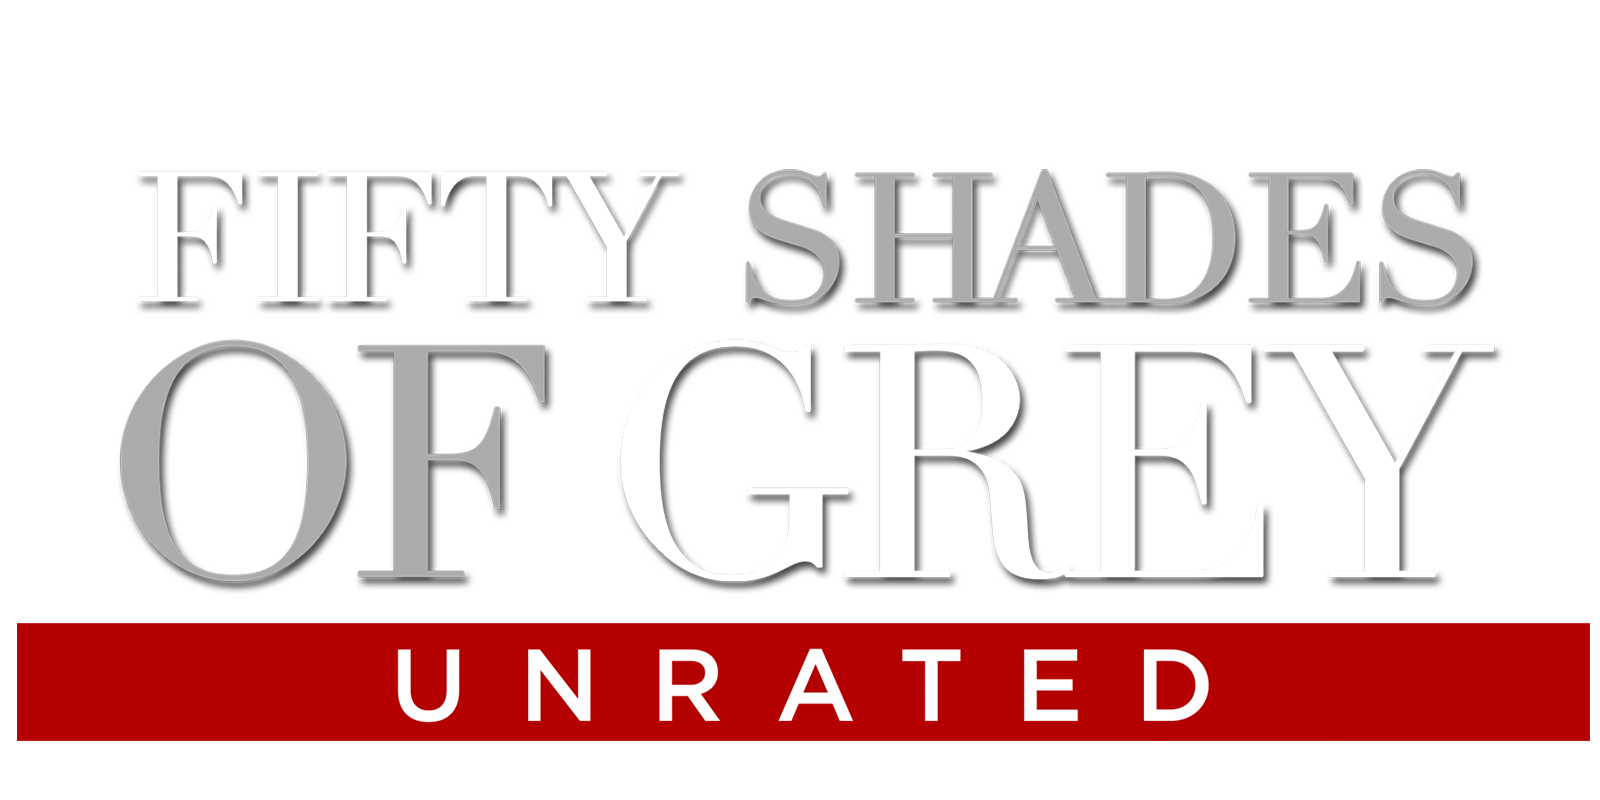 50 Shades Of Grey Full Movie Uncut